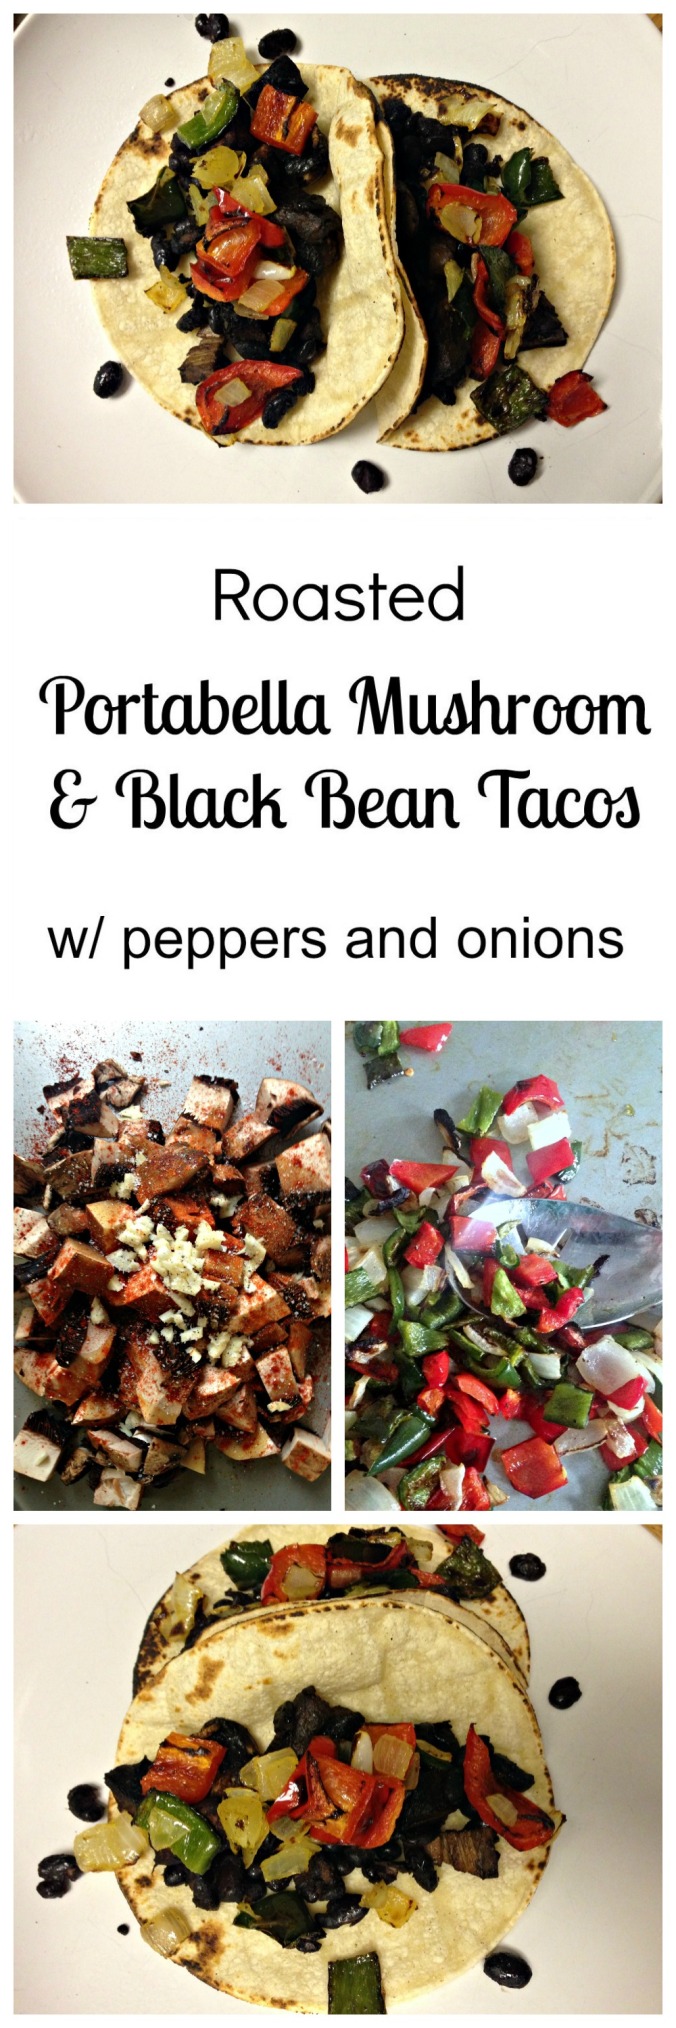 Portabella Mushroom & Black Bean Tacos